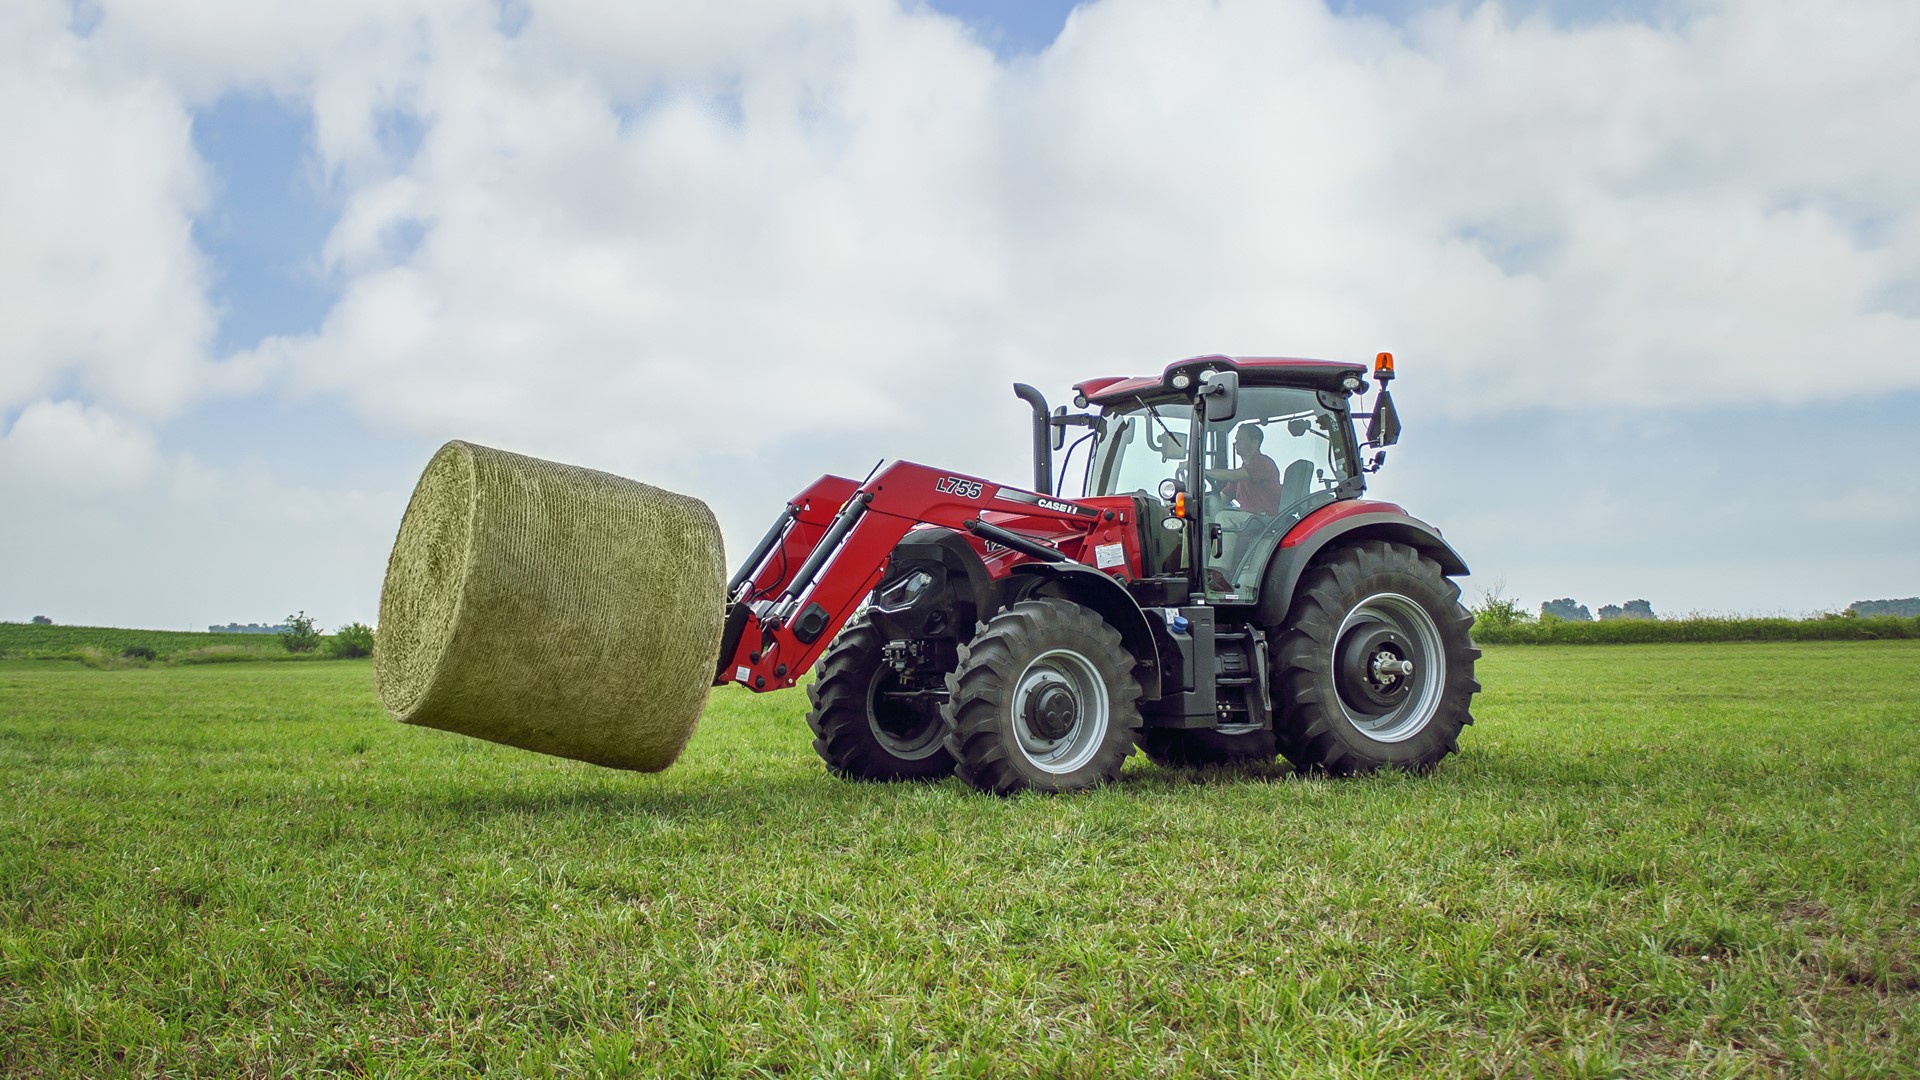 Case IH Launches Next Generation of Maxxum Series Tractors